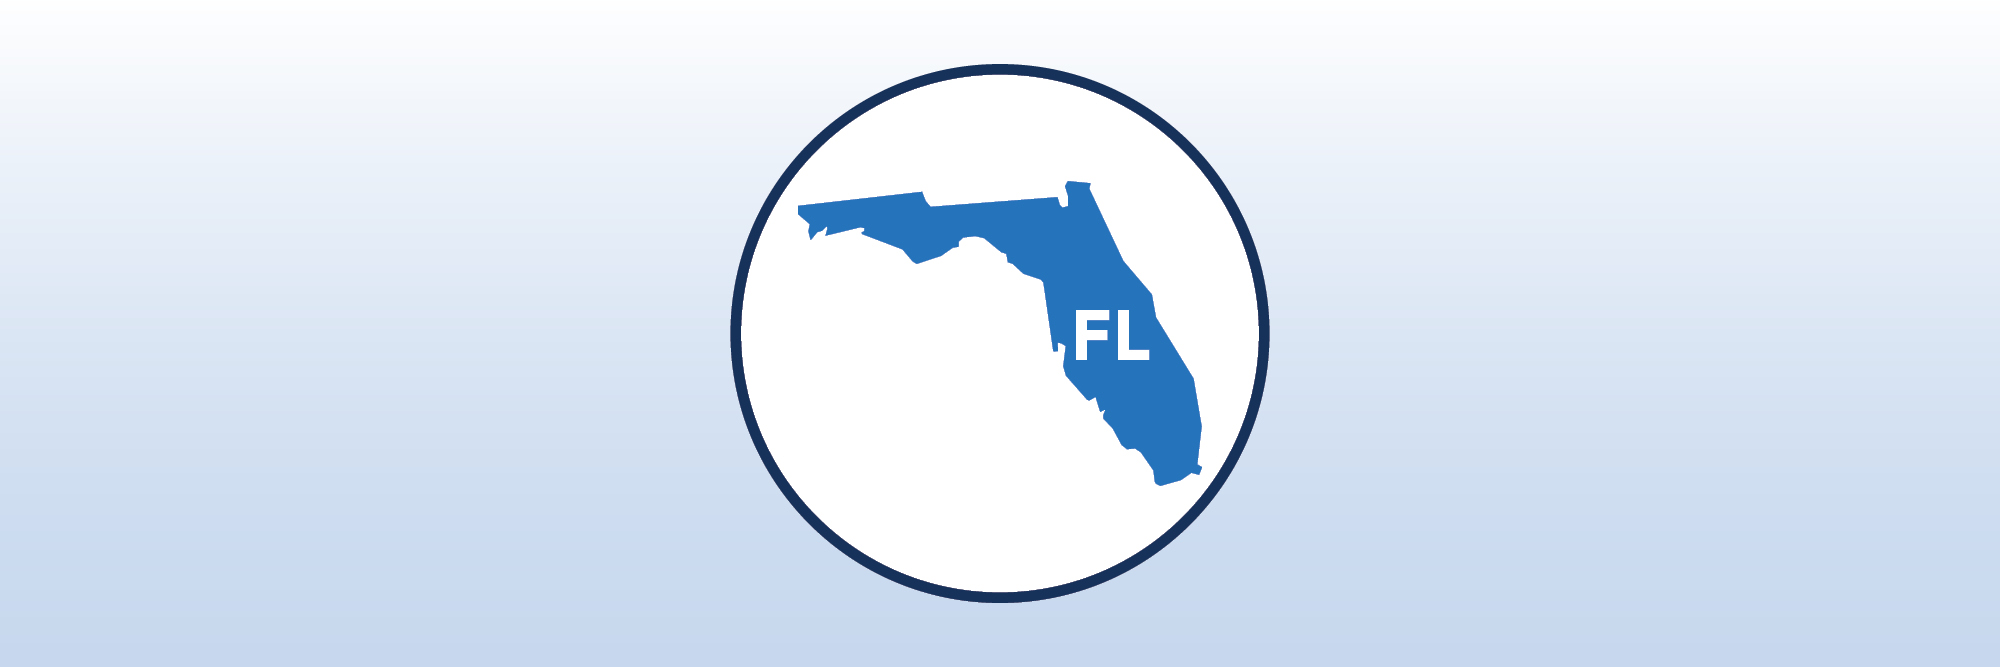 Image for Florida enacts annual skin cancer screening exam legislation